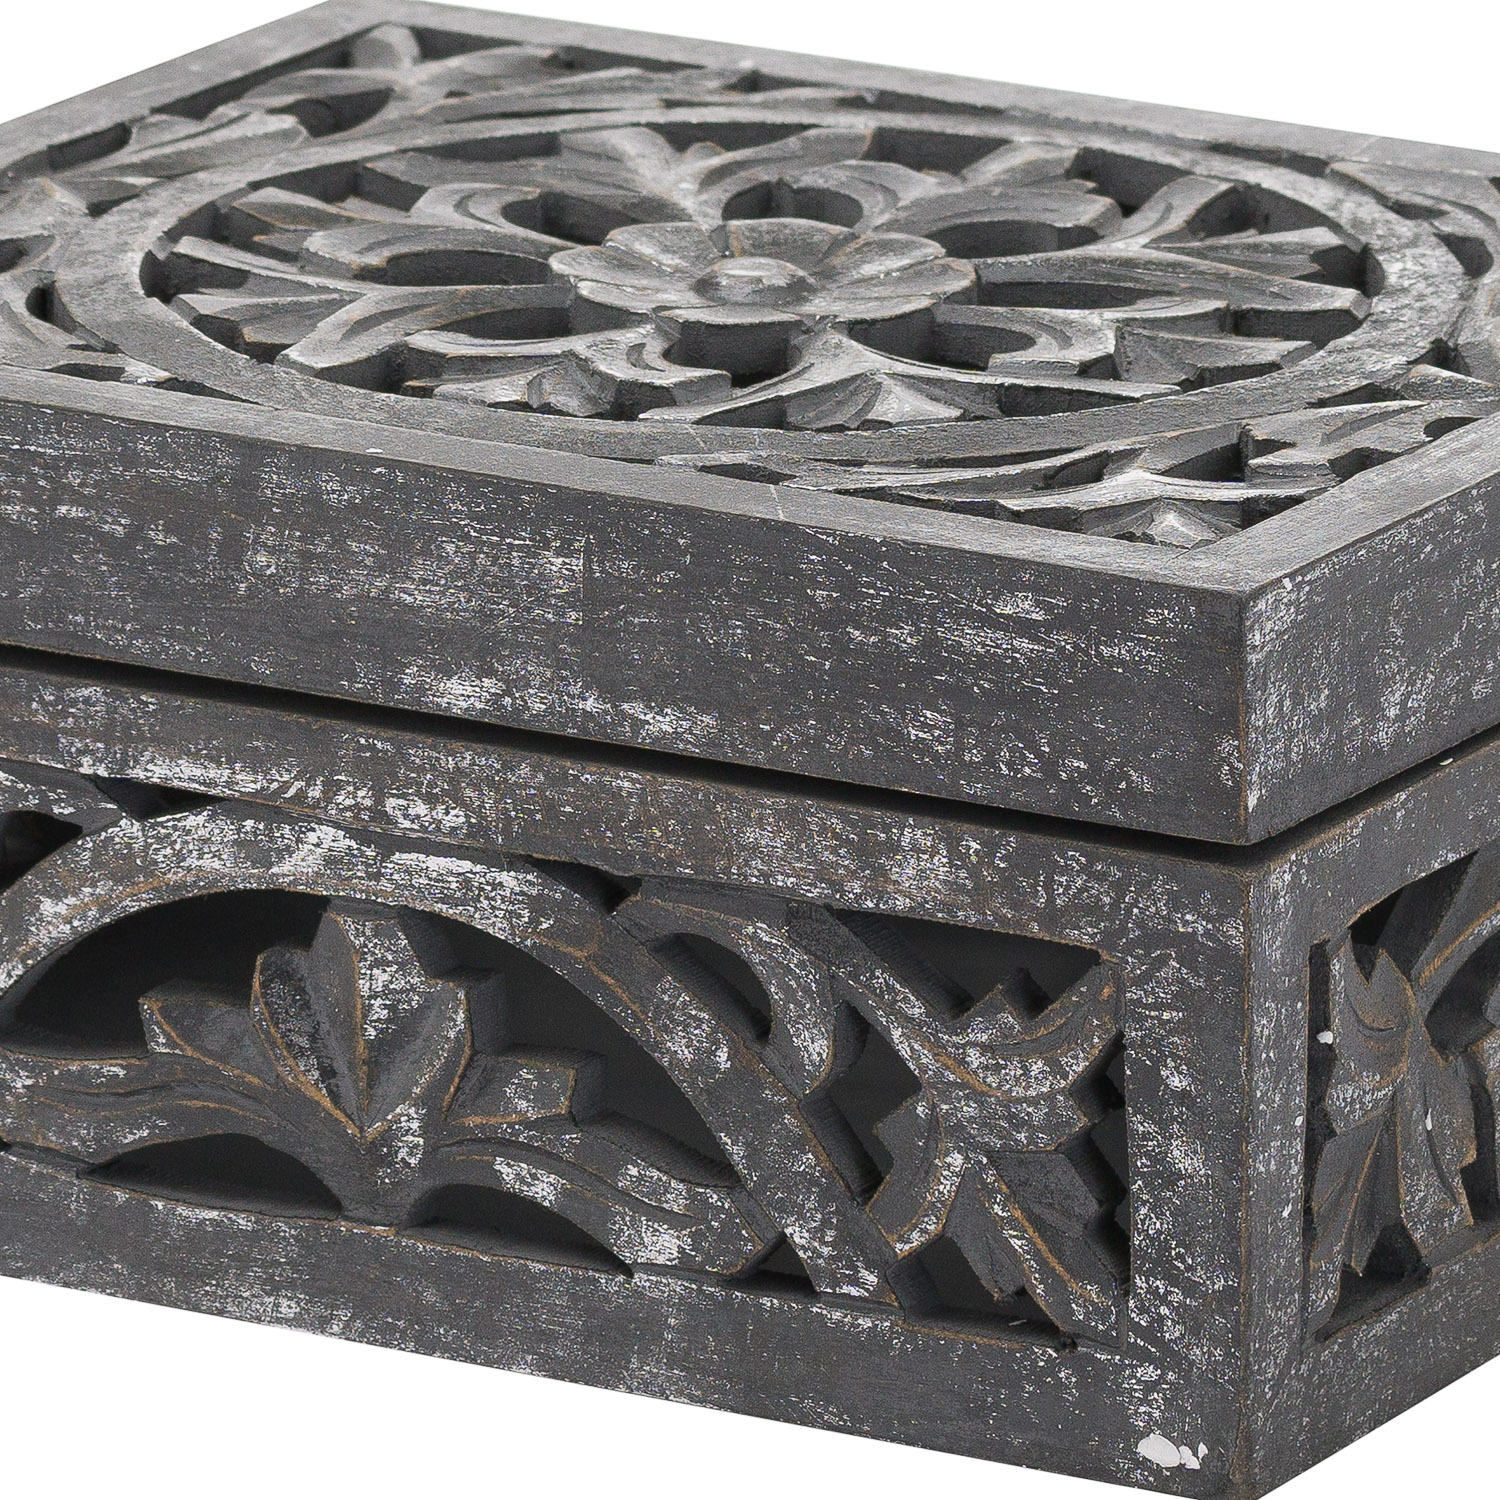 Lustro Carved Antique Metallic Wooden Box - Image 2